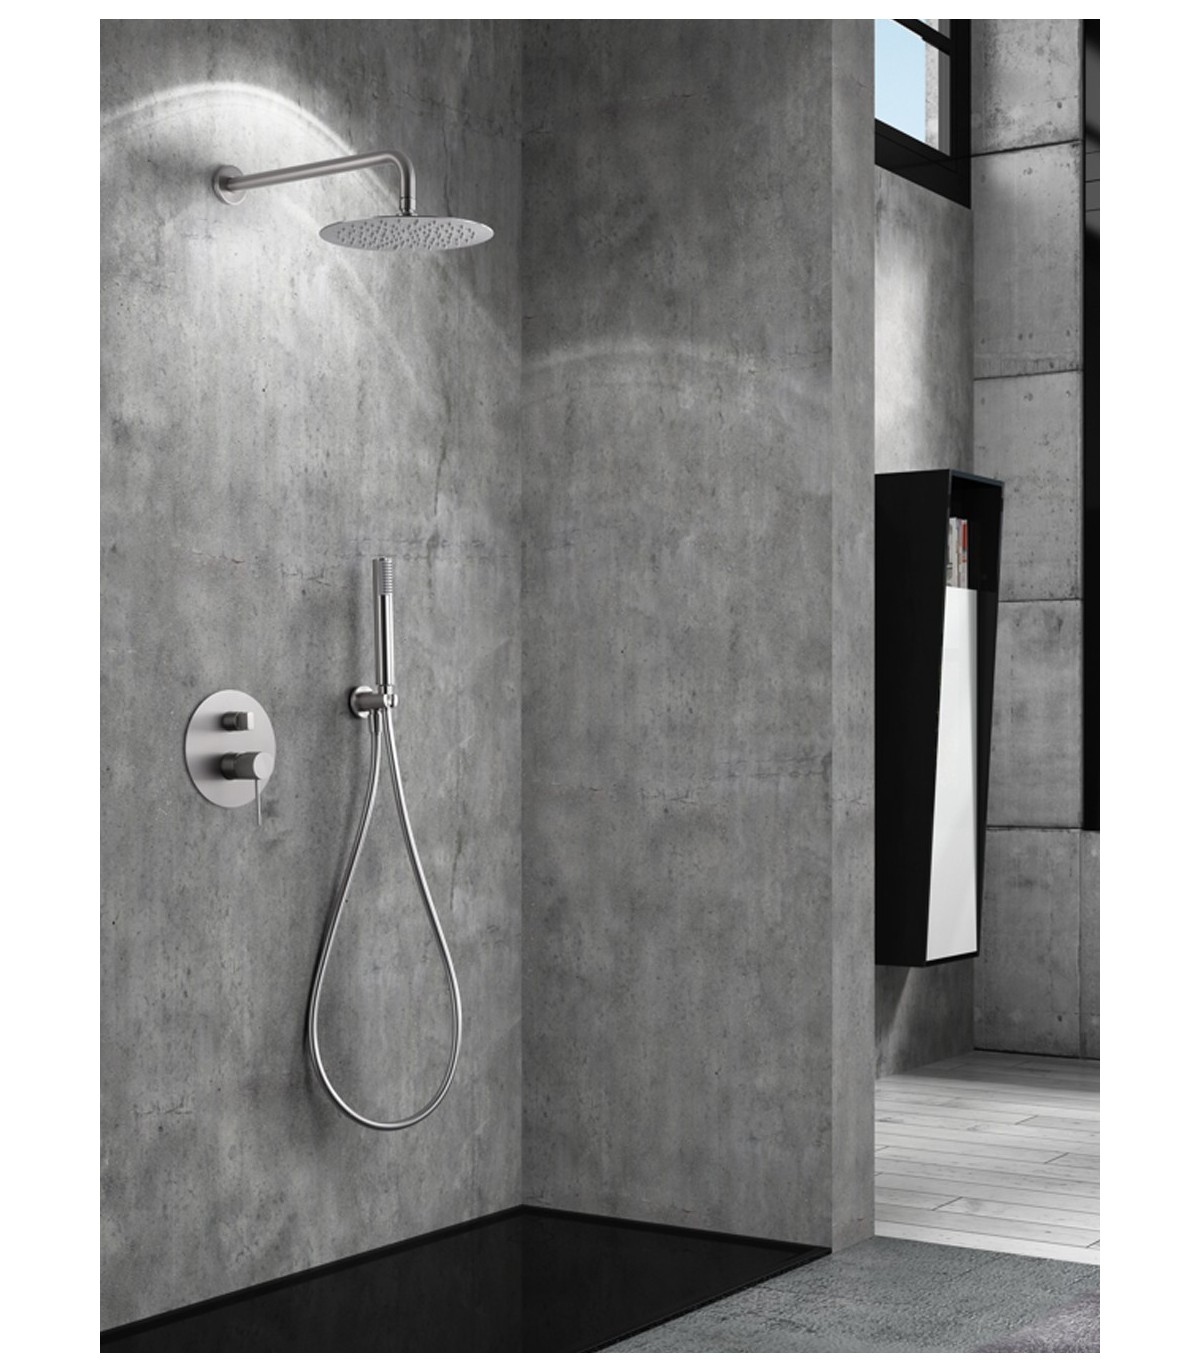 Comprar Kit de ducha termostatica empotrada negro mate cuadrado online